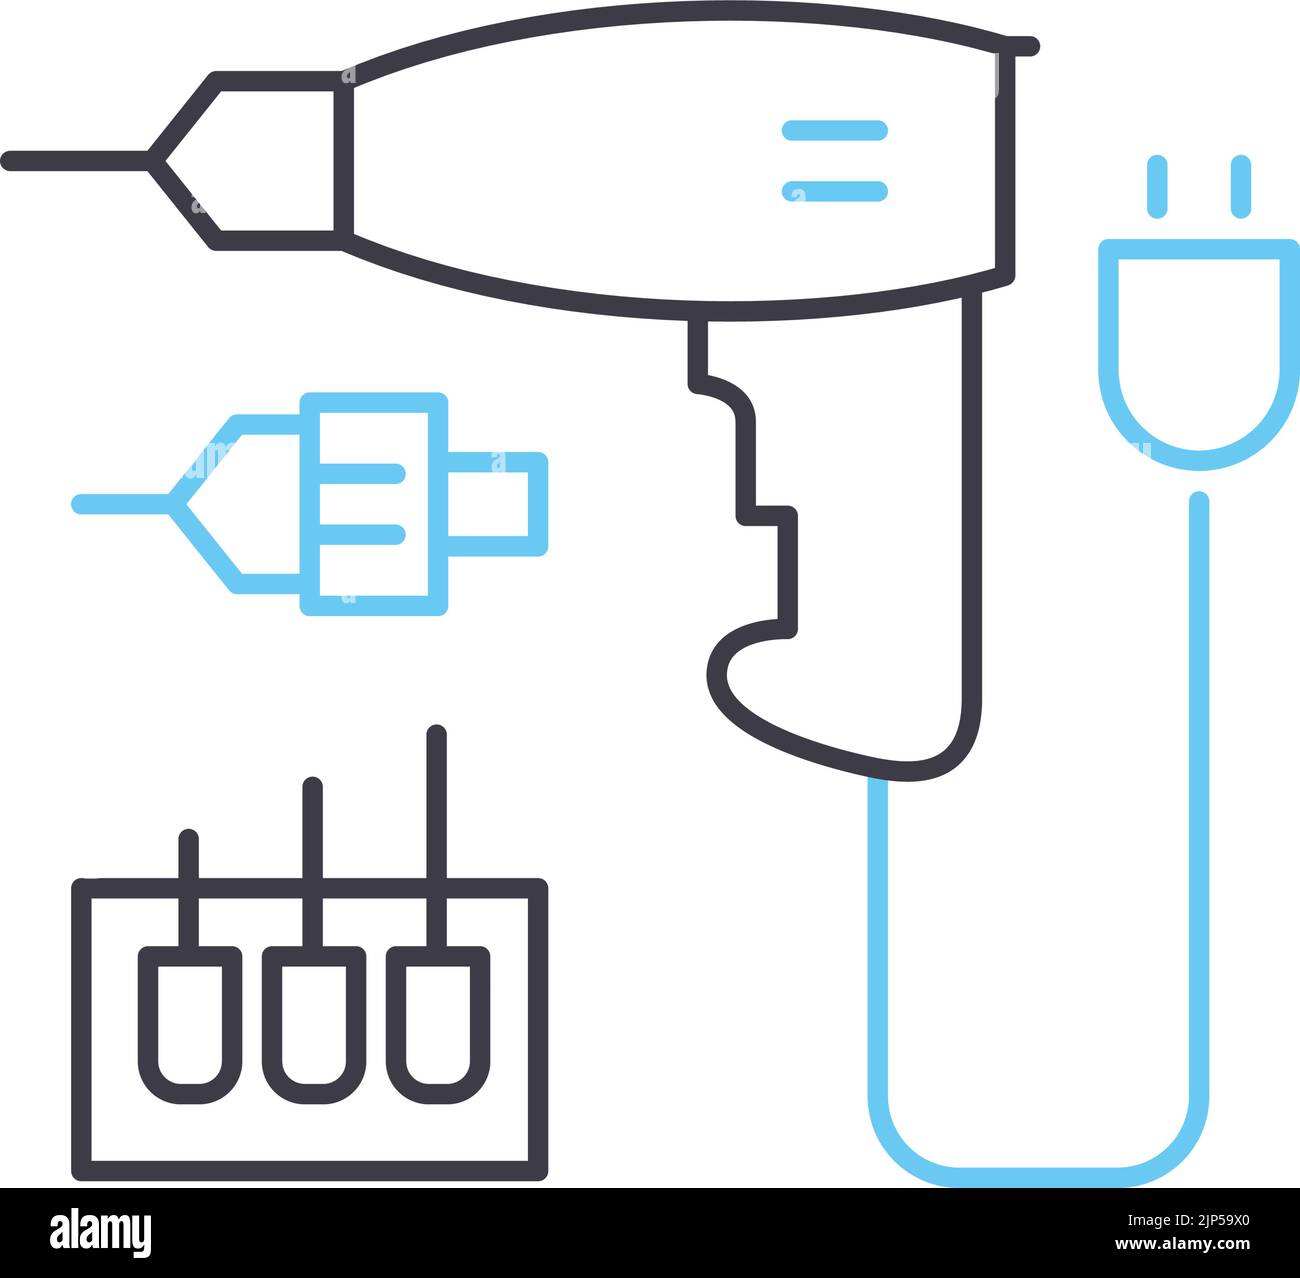 electic screwdriver line icon, outline symbol, vector illustration, concept sign Stock Vector